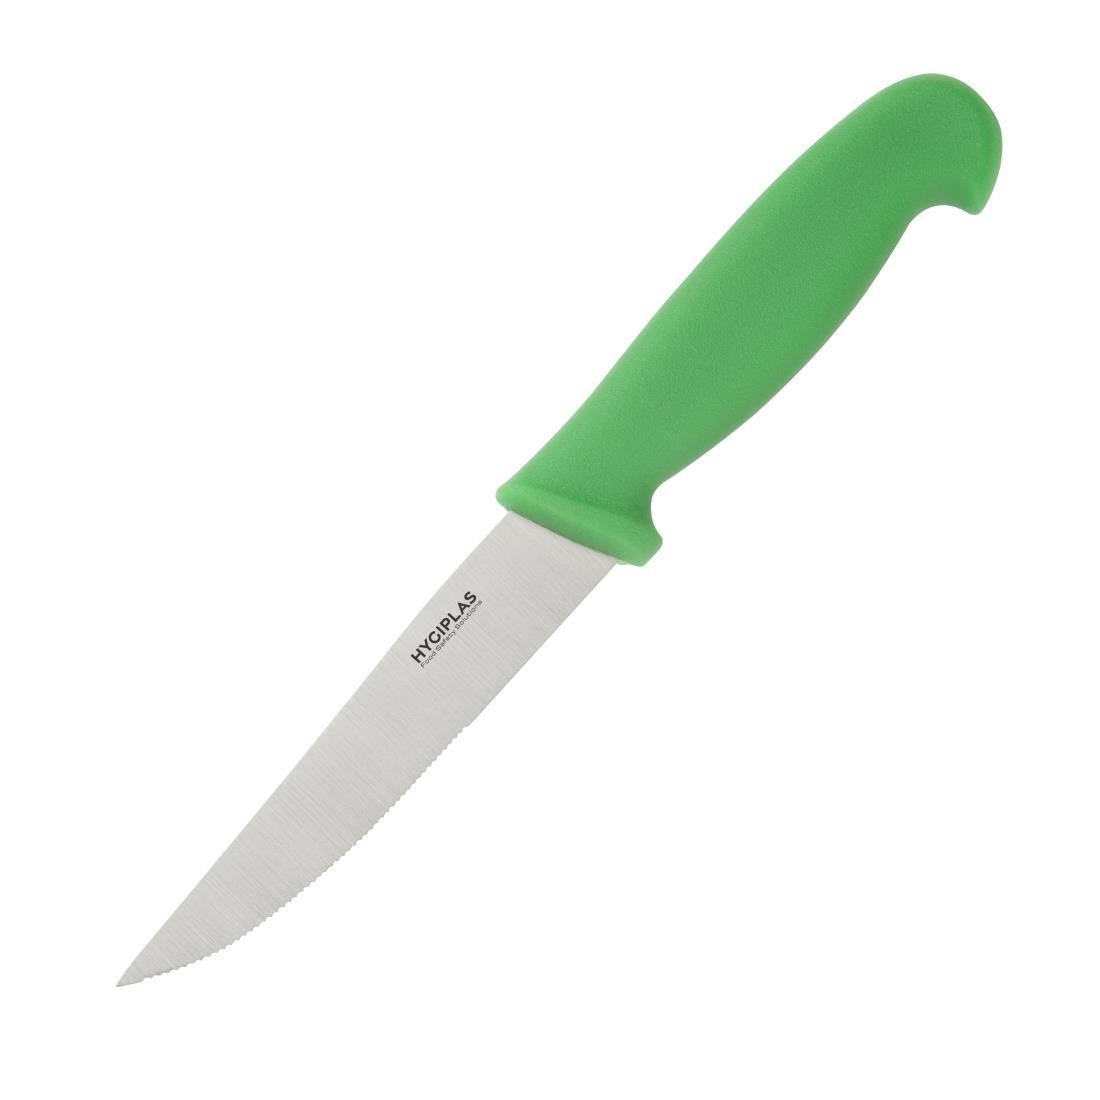 Hygiplas Serrated Vegetable Knife Green 10cm - C862  - 1